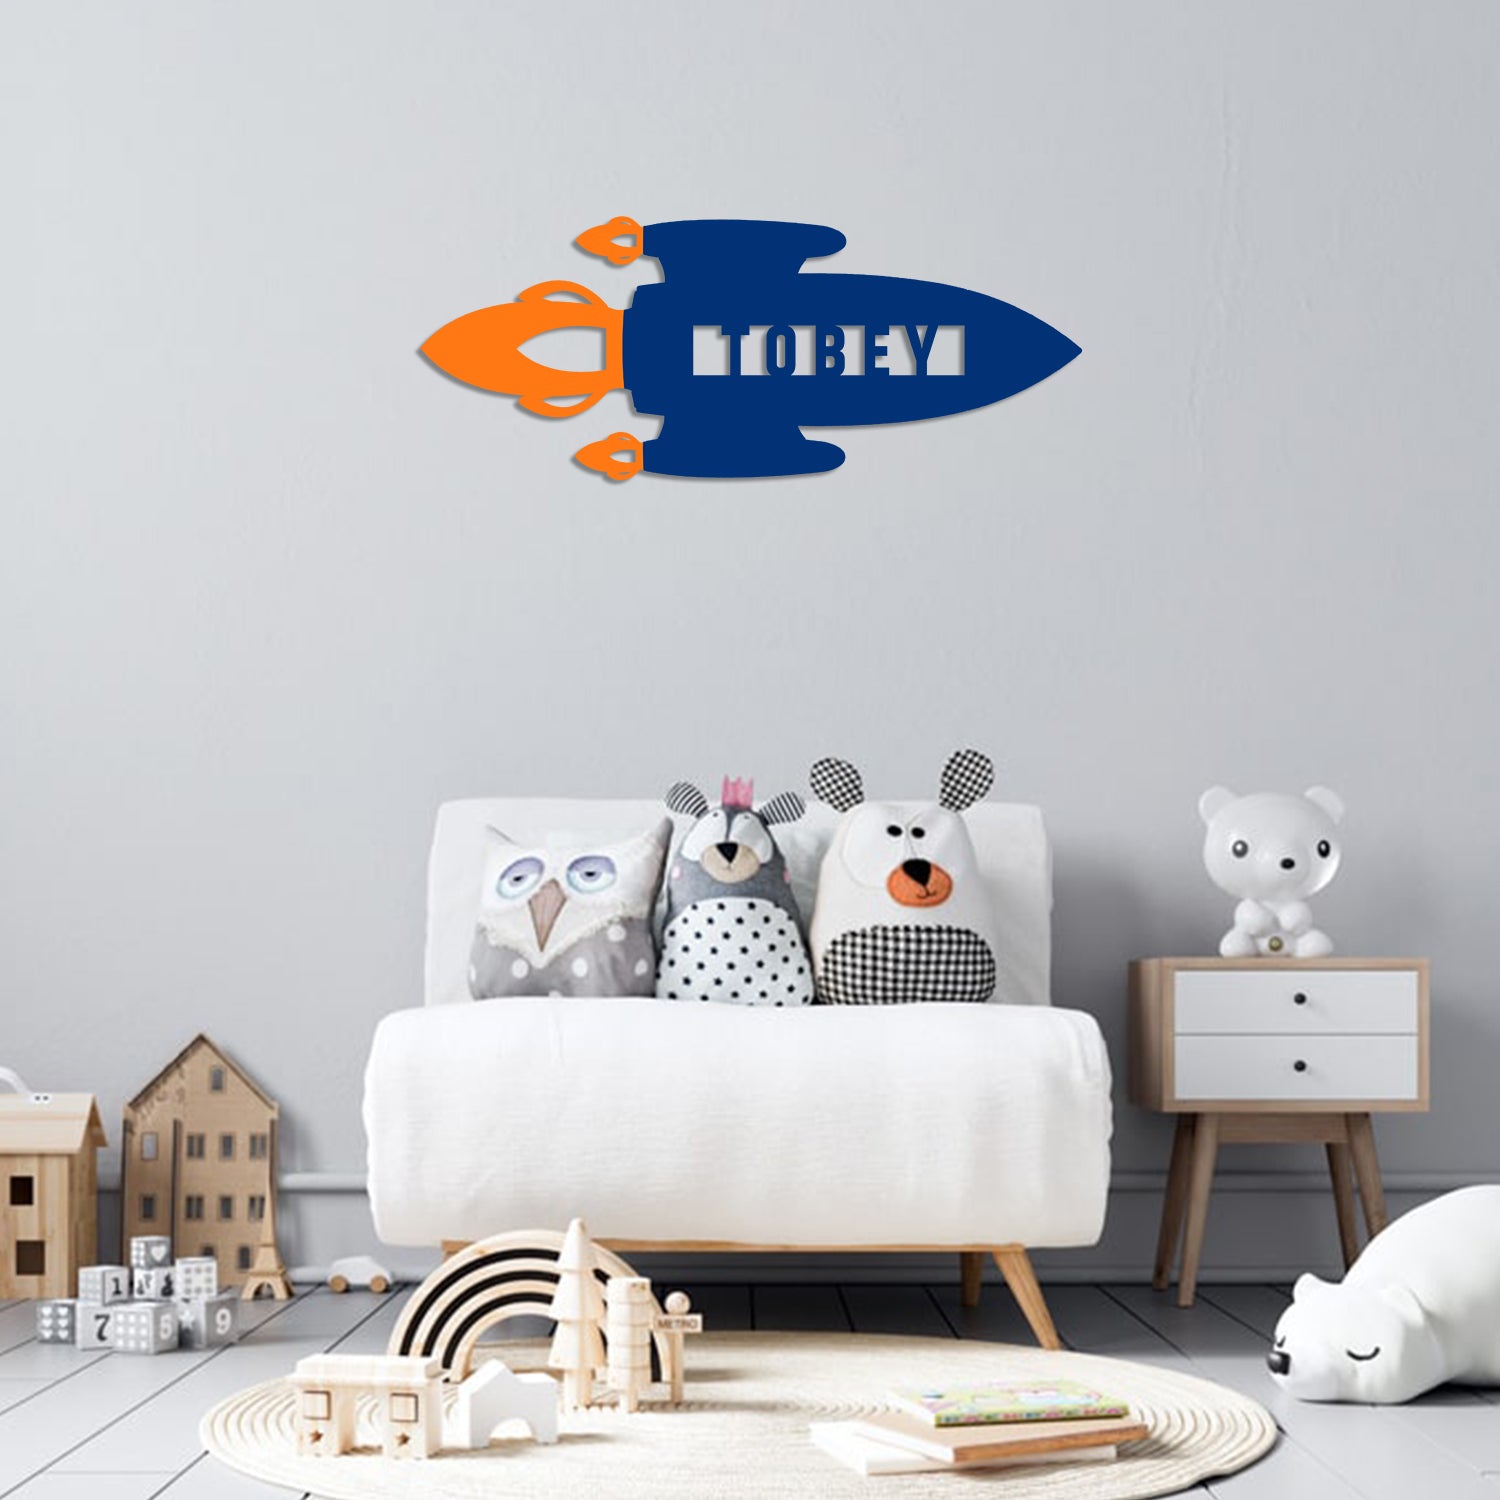 Personalized Rocket Metal Wall Decoration, Rocket Modern Nursery Decor For Son